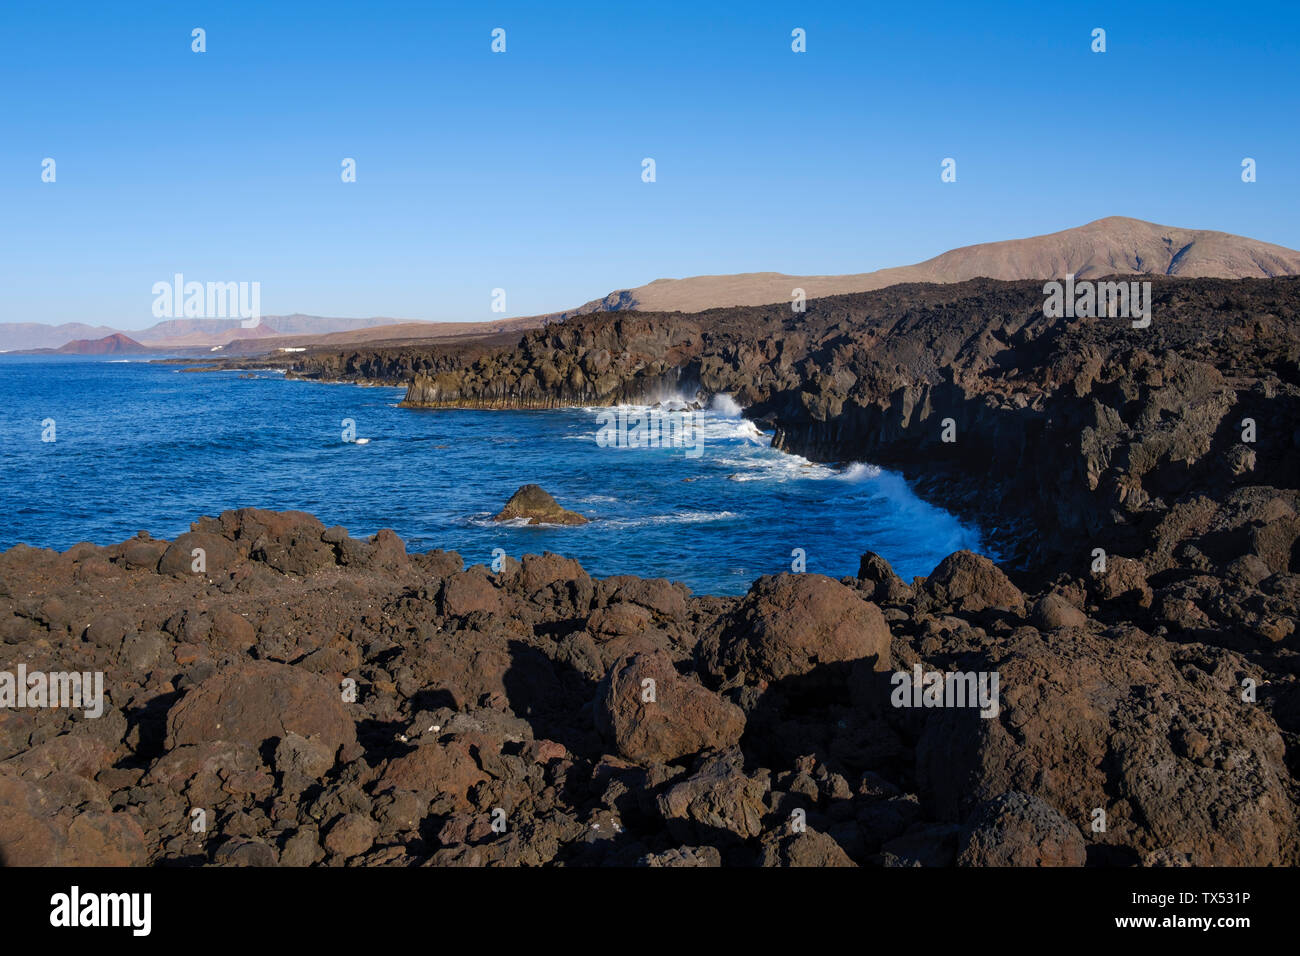 Spain, Canary Islands, Lanzarote, Tinajo, Los Volcanos nature park, view over rocky coast Stock Photo